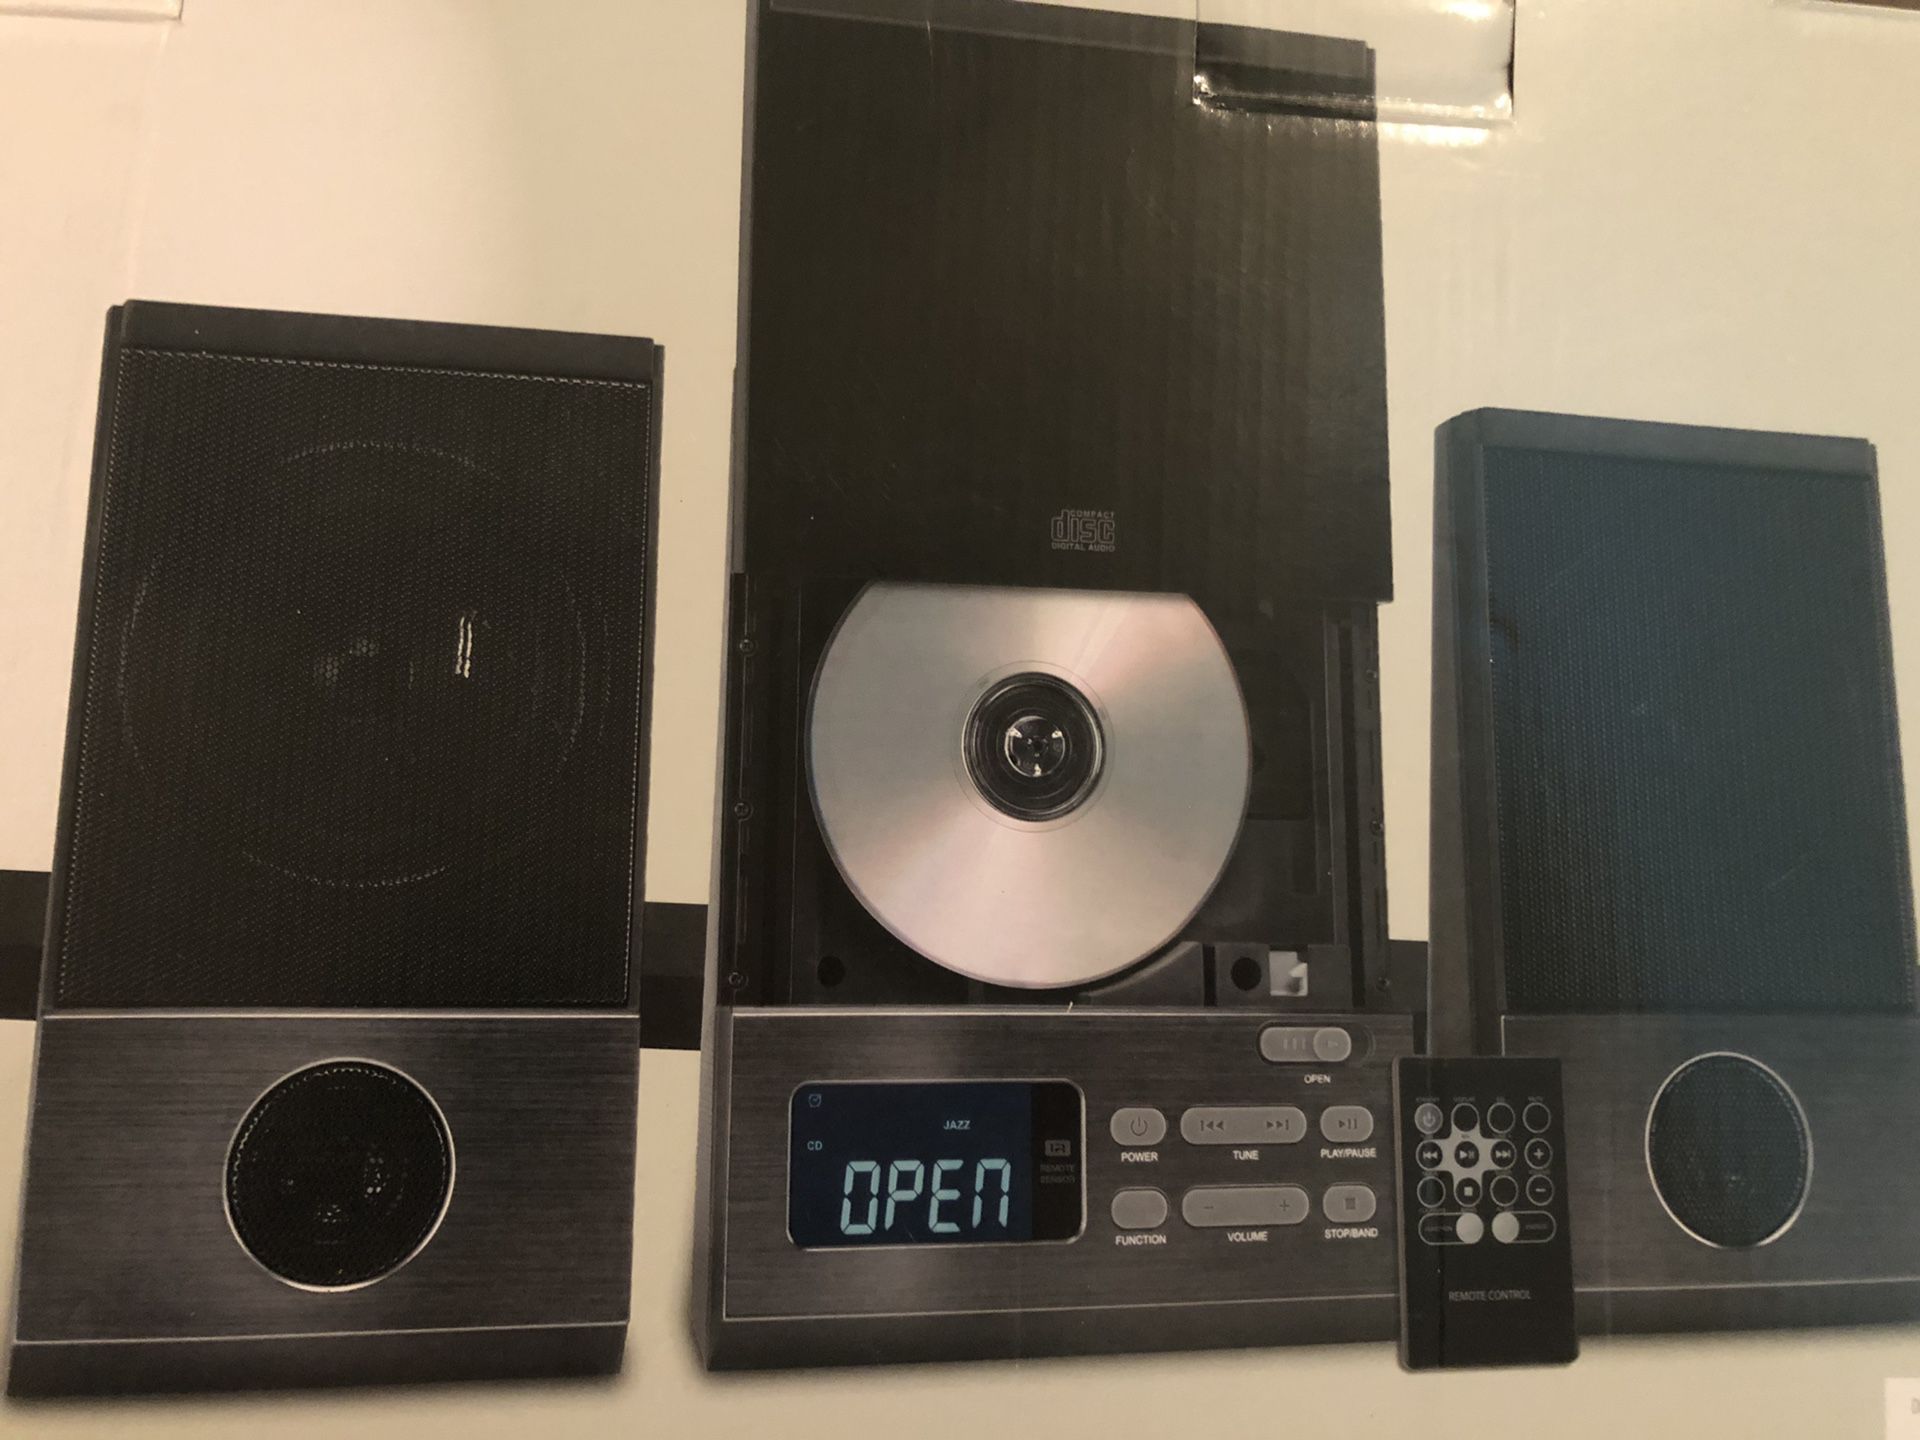 Onn Mini stereo system (CD, radio, aux)